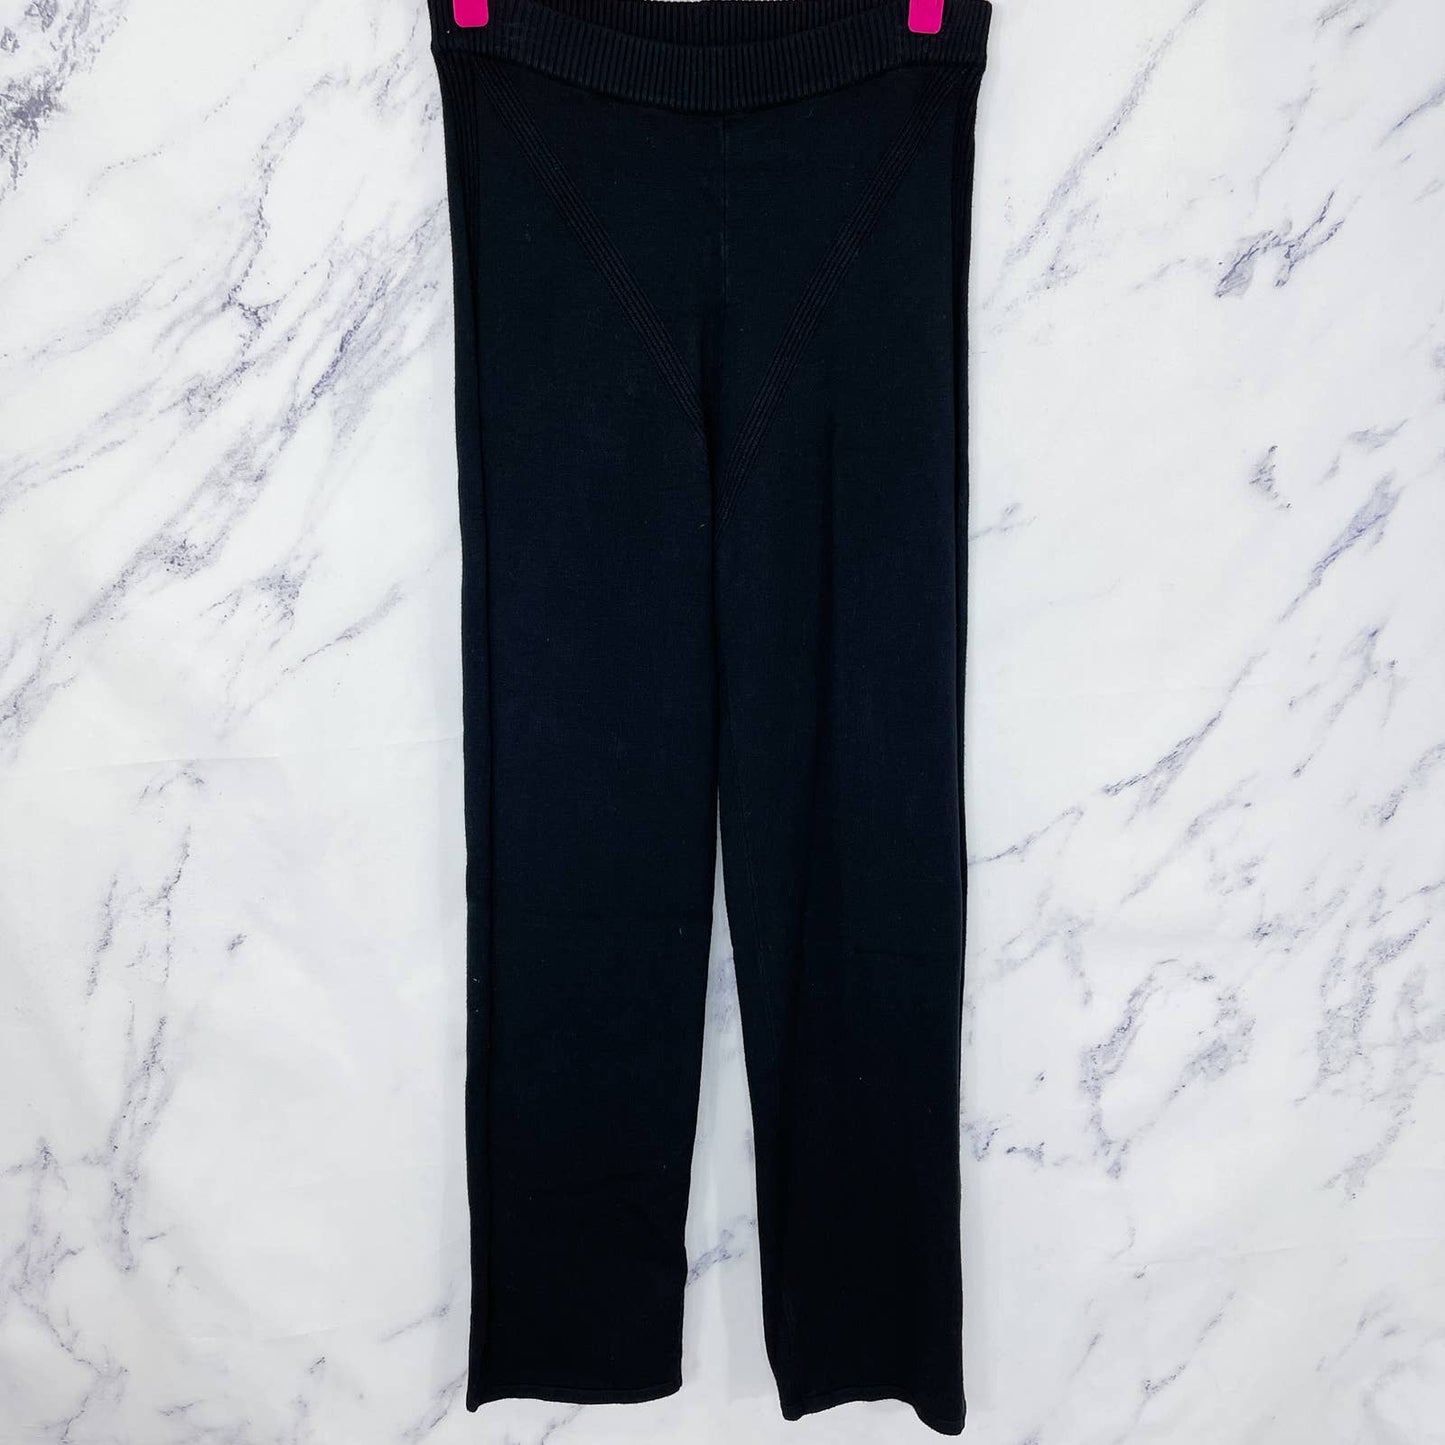 Good American | Black Knit Pants | Sz 4 (XL)